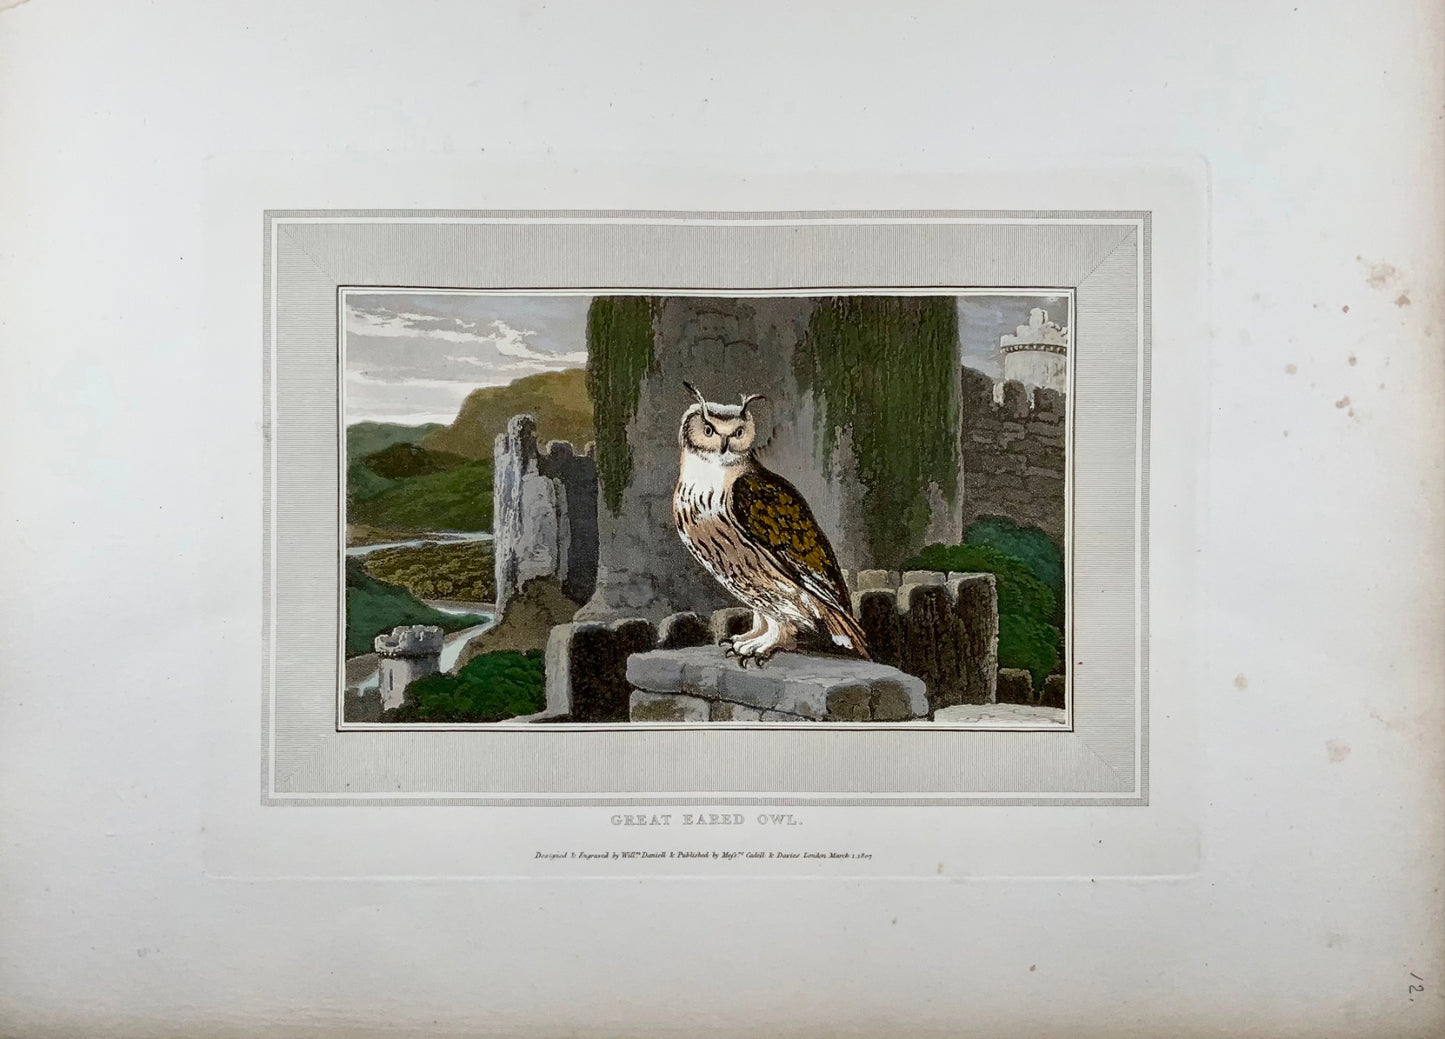 1807 William Daniell, Great Eared Owl, ornithology, hand coloured aquatint